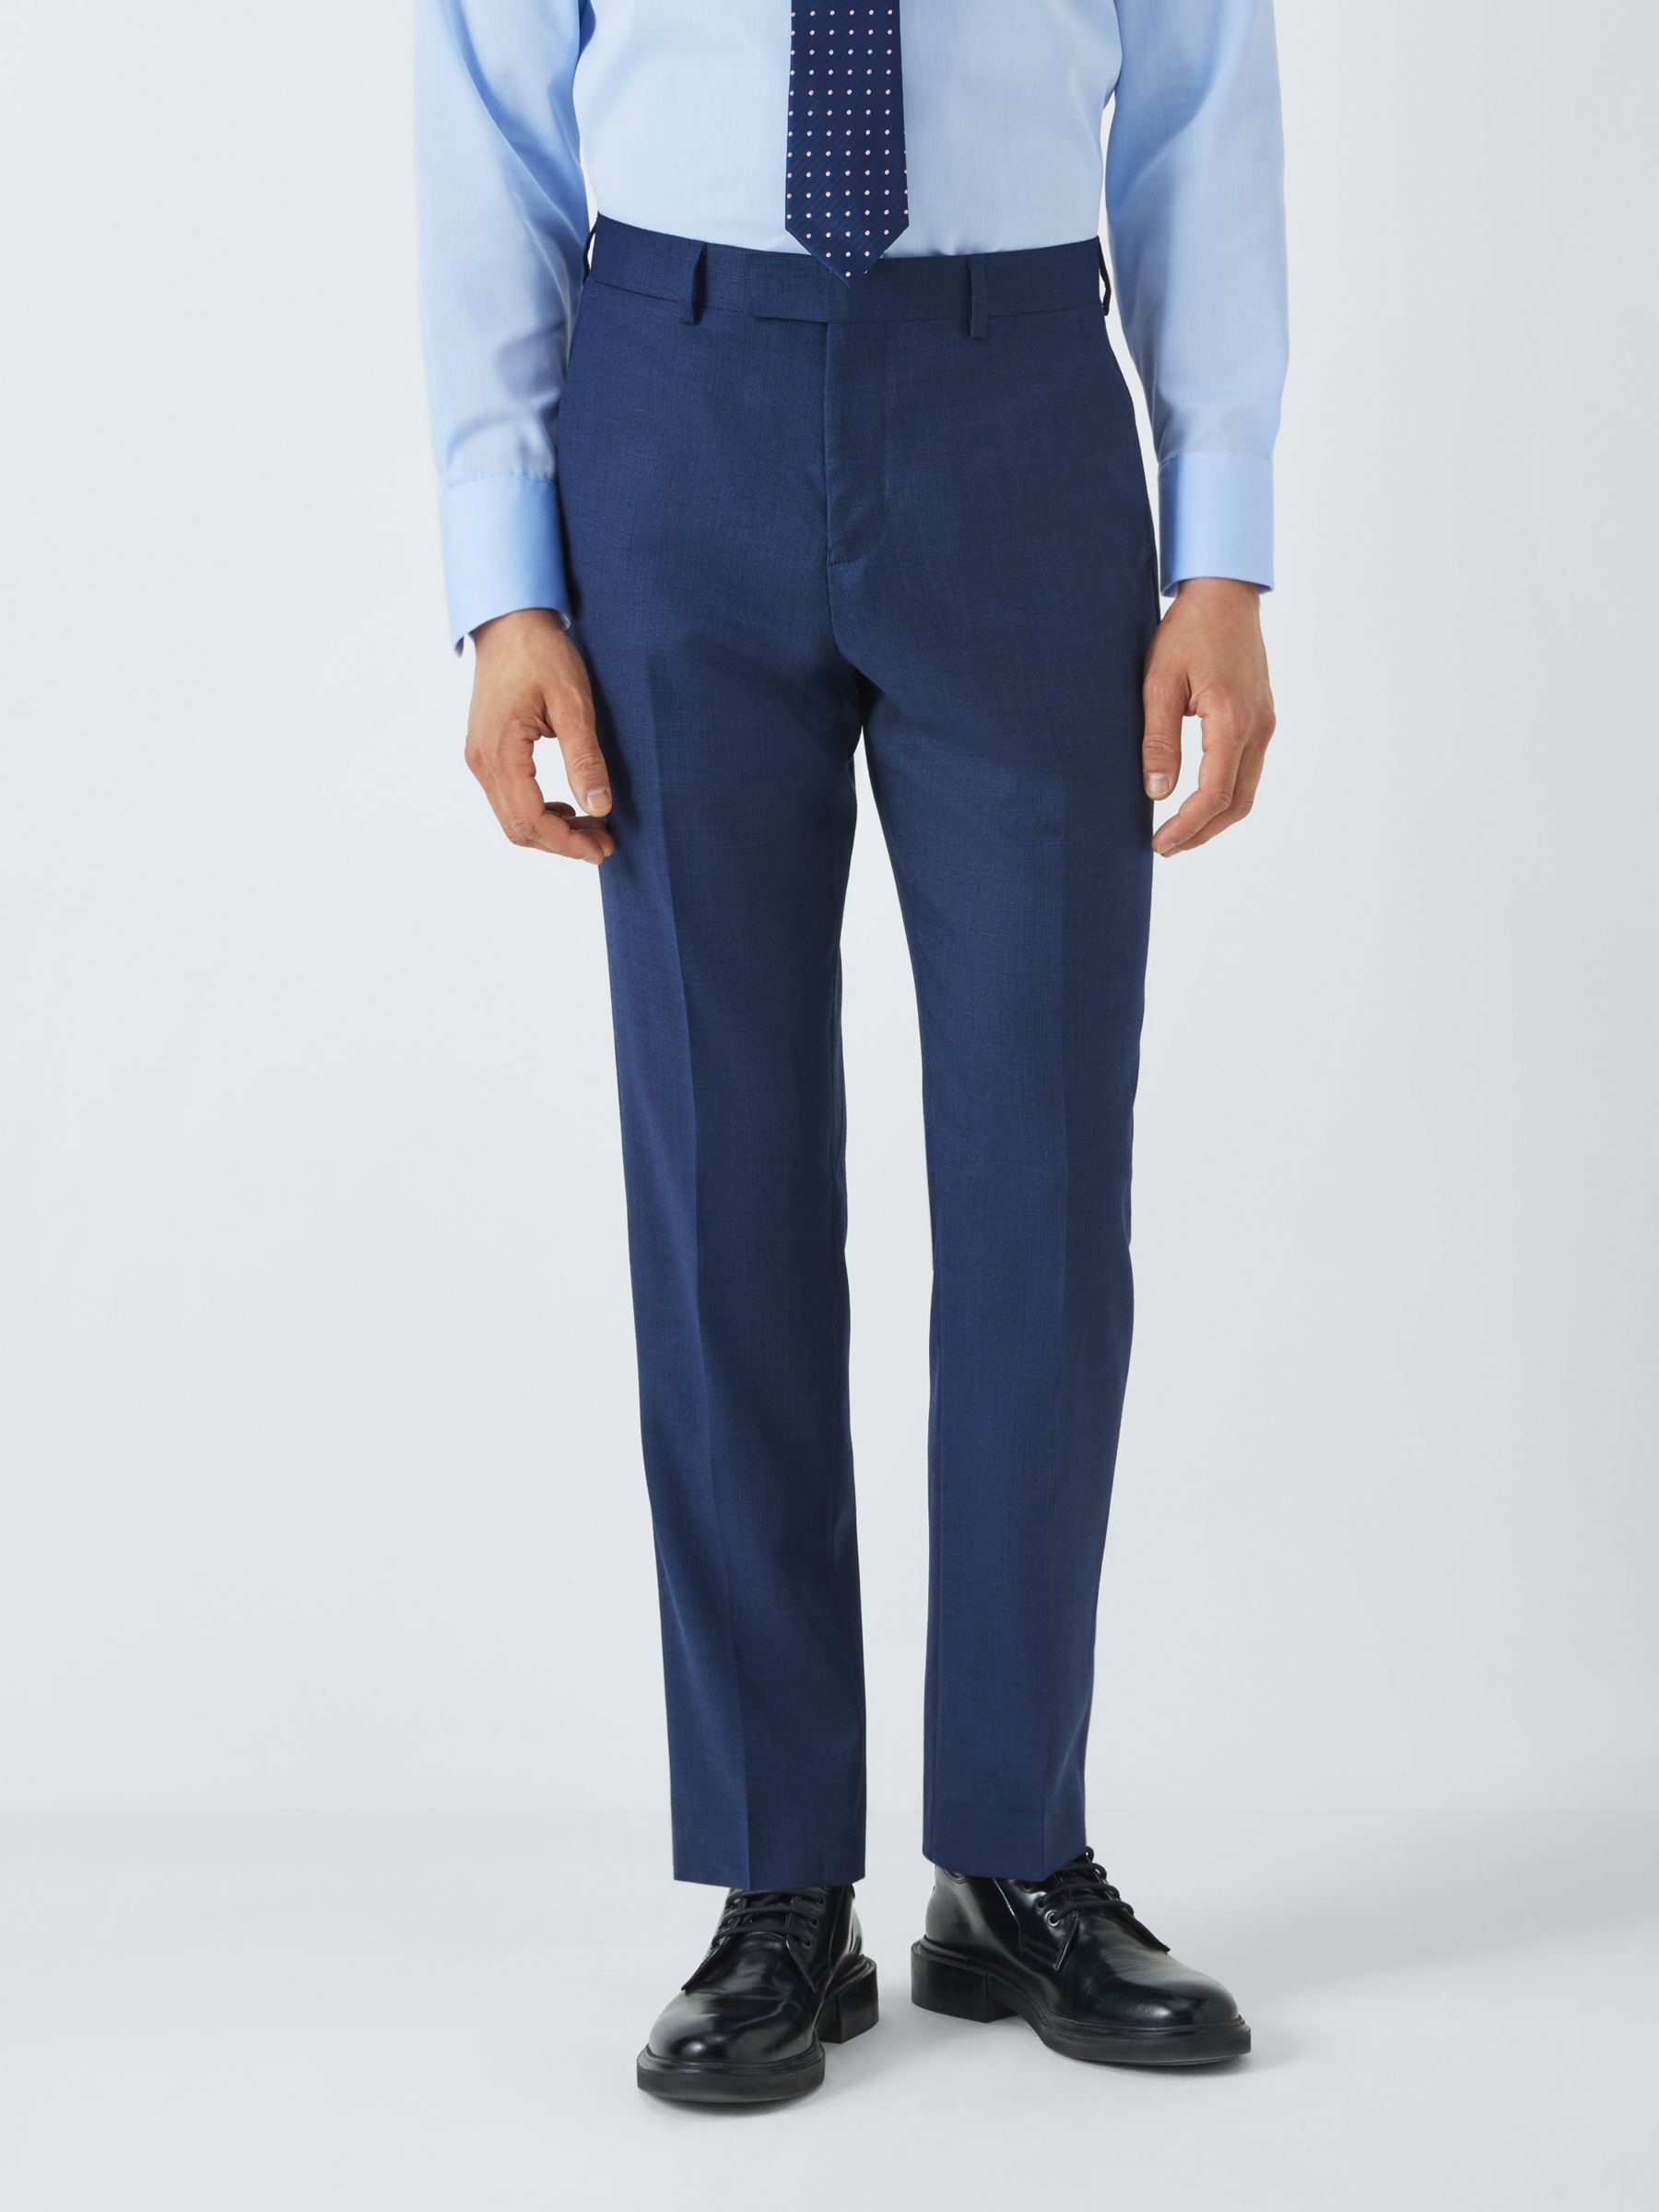 John Lewis Clarendon Wool Regular Suit Trousers, Royal Blue, 40R